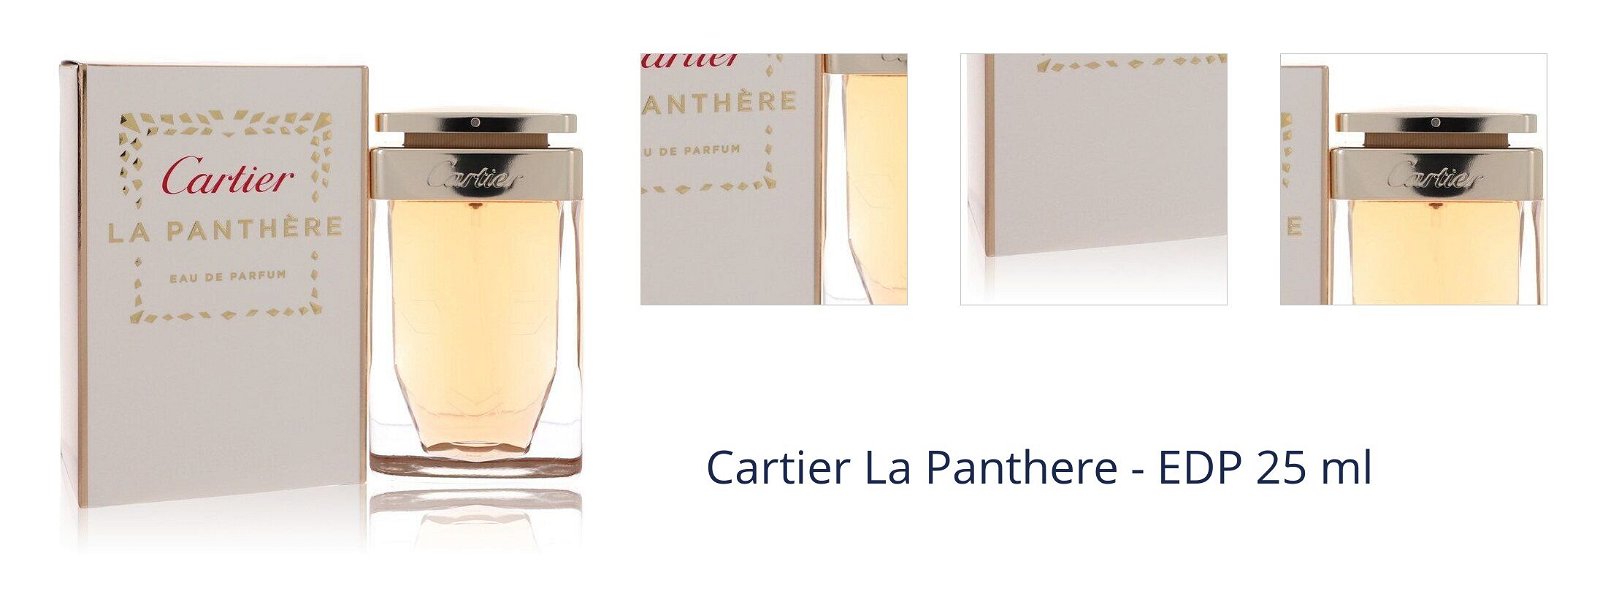 Cartier La Panthere - EDP 25 ml 1